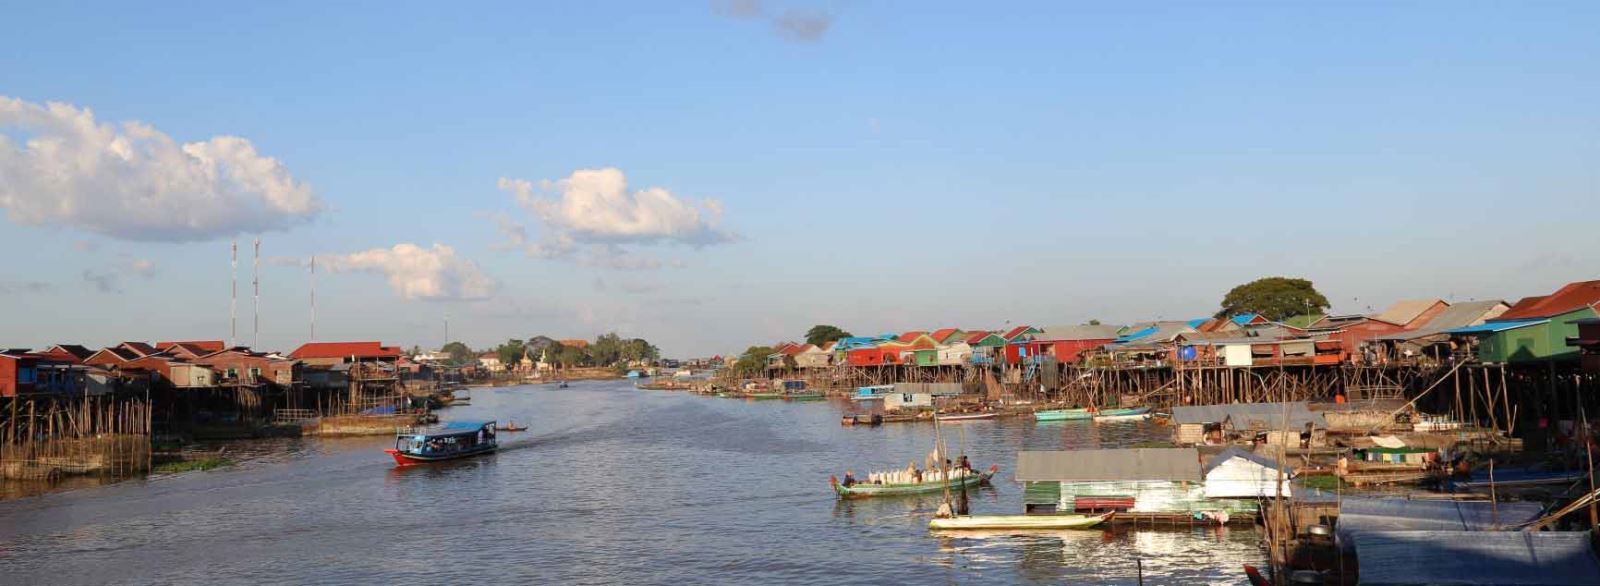 Tonle Sap - Lakeside or Floating Villages